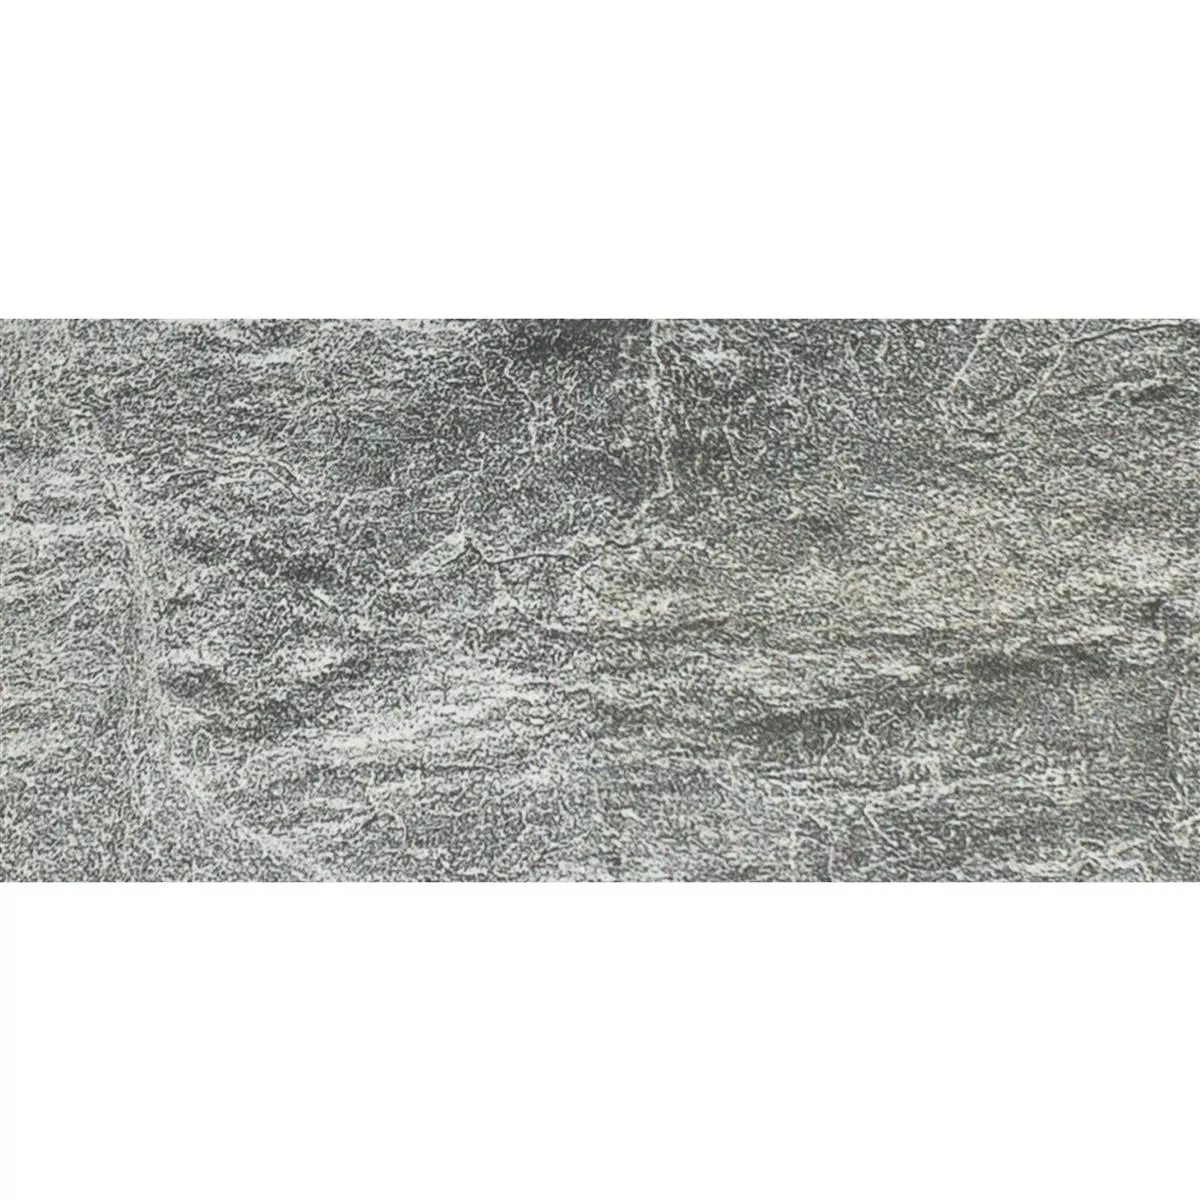 Wall Tiles Reymond Waved Anthracite 6x25cm